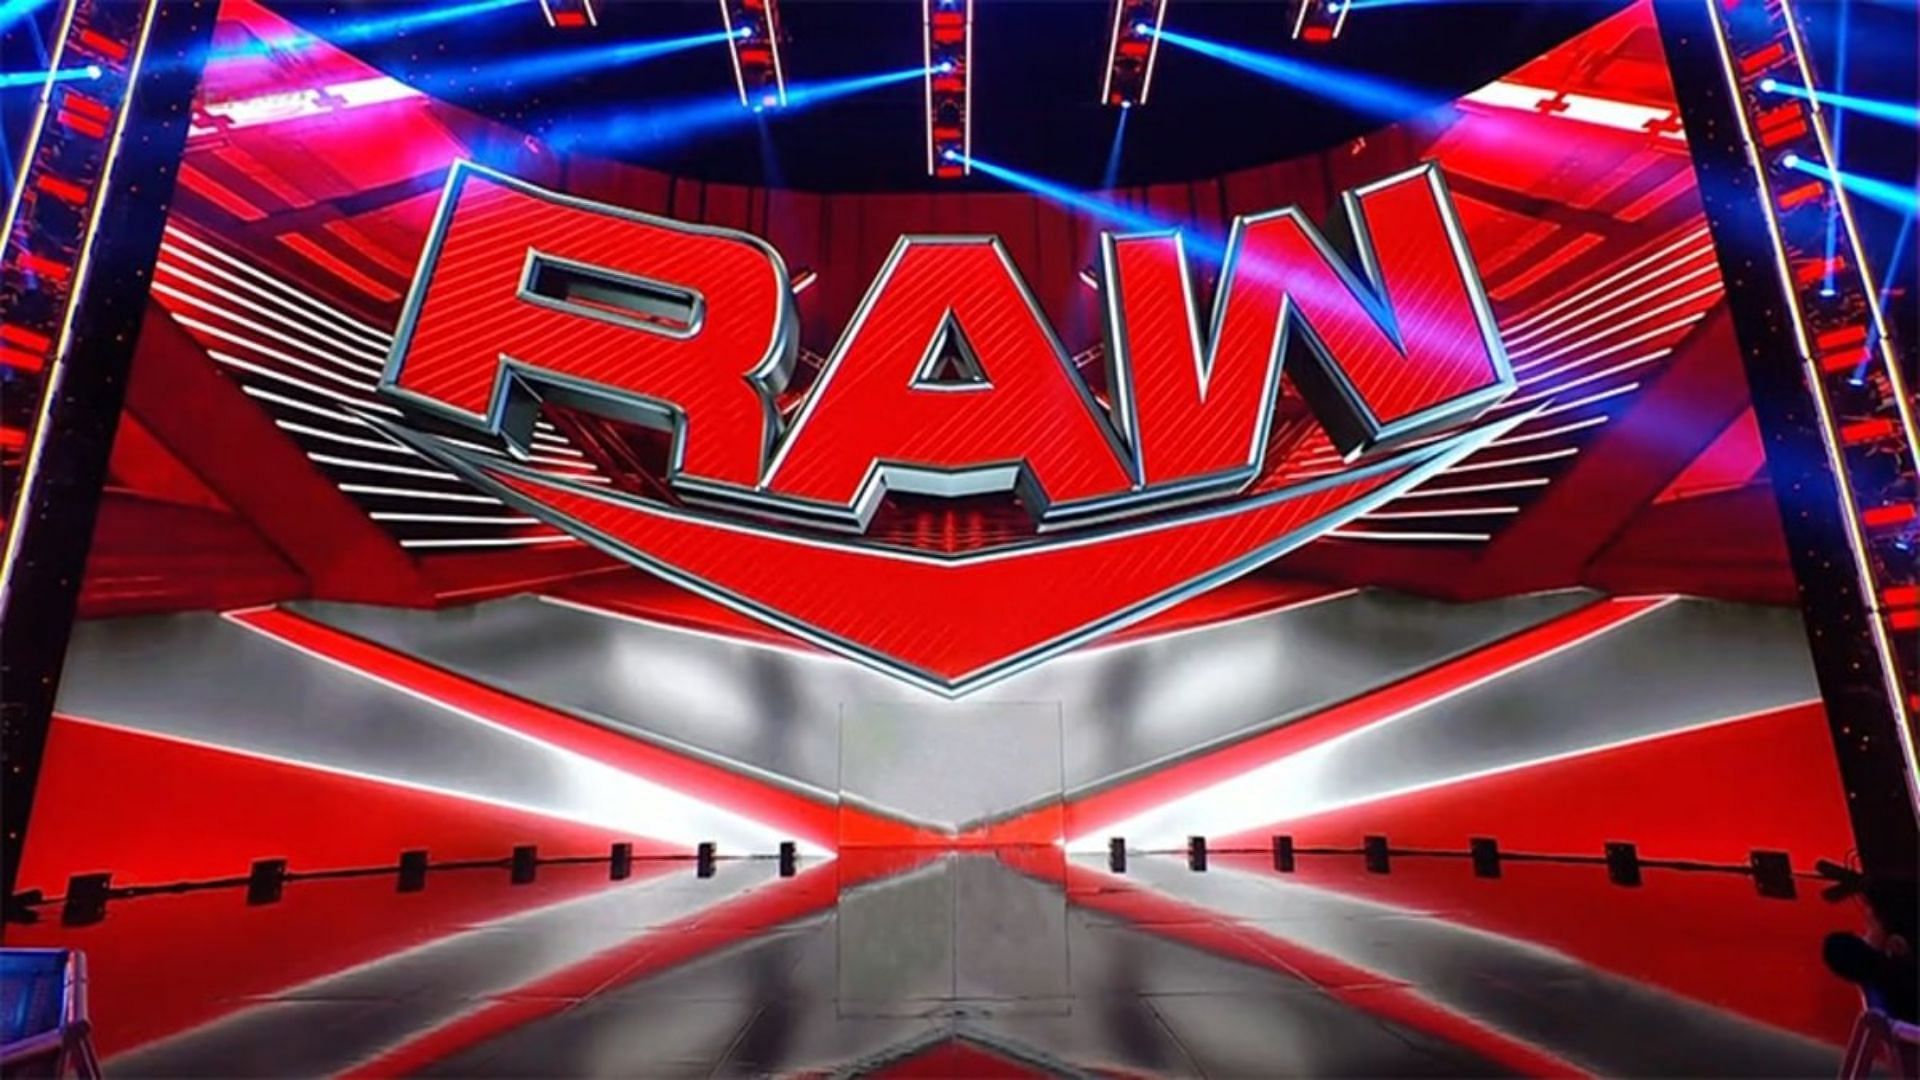 WWE RAW airs every Monday night